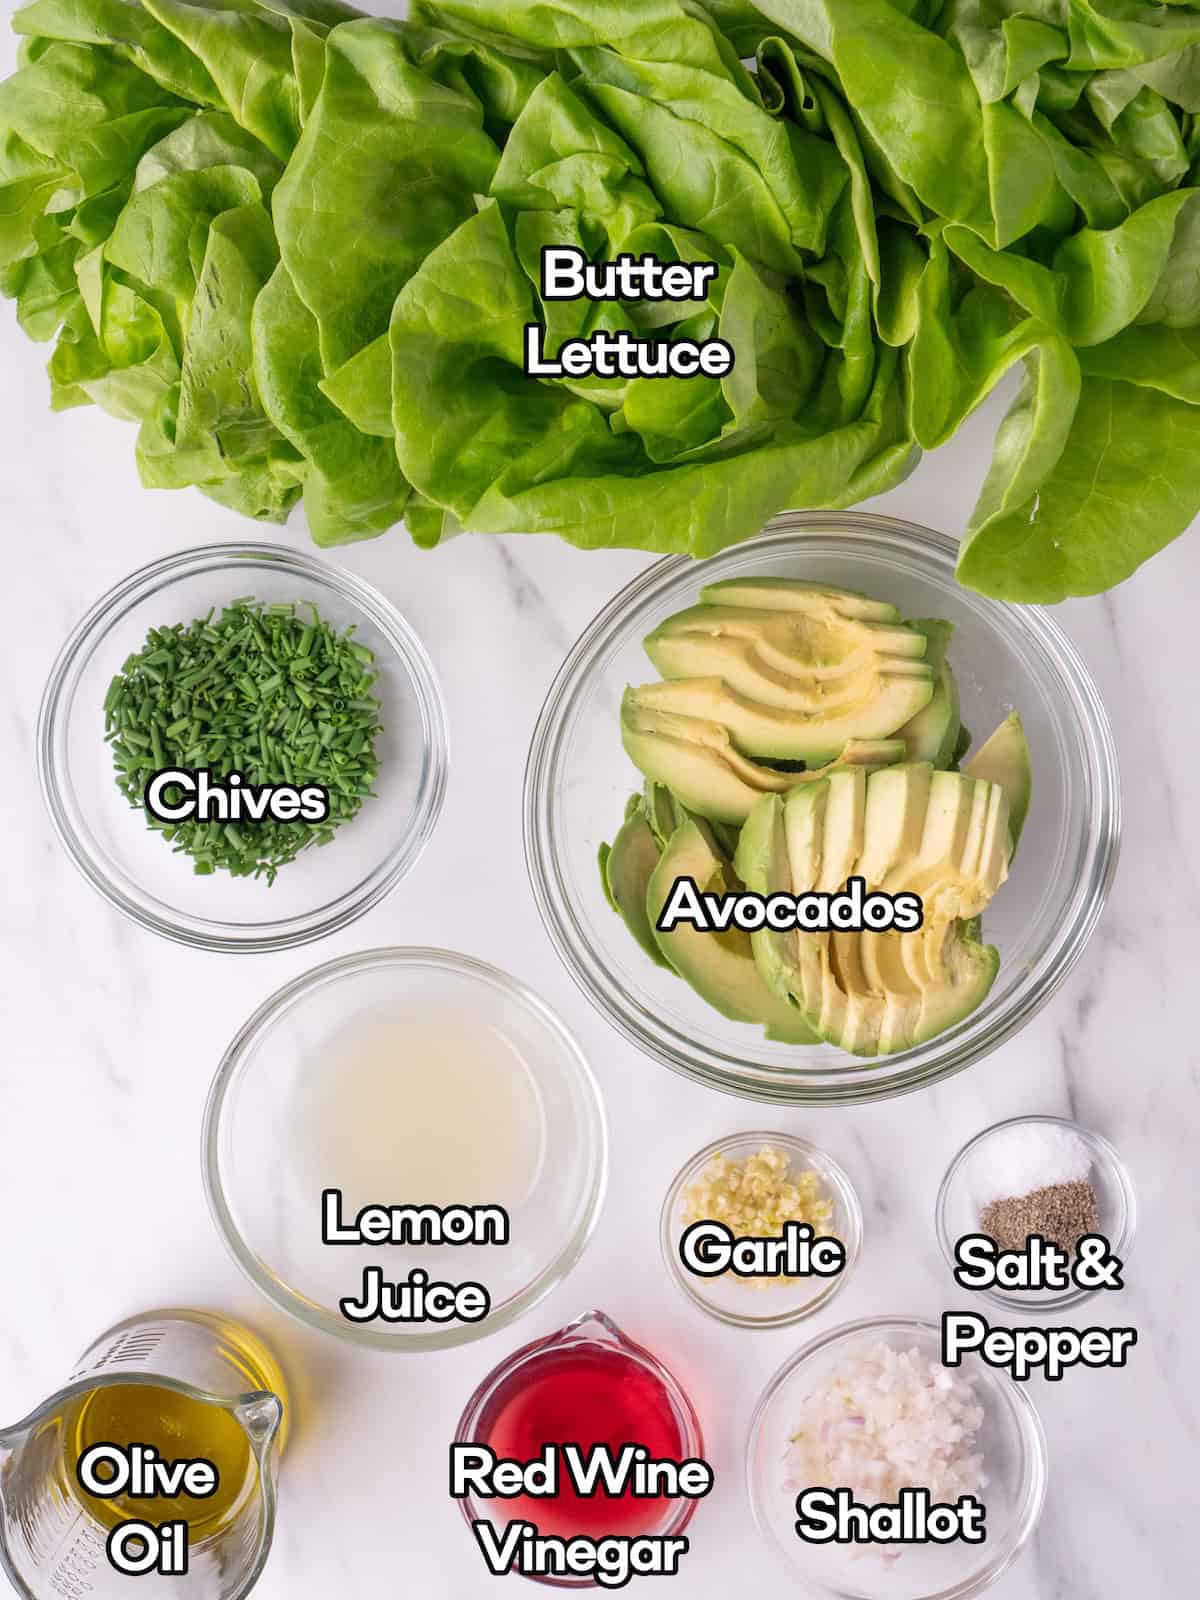 Mise en place of all ingredients to make butter lettuce salad.